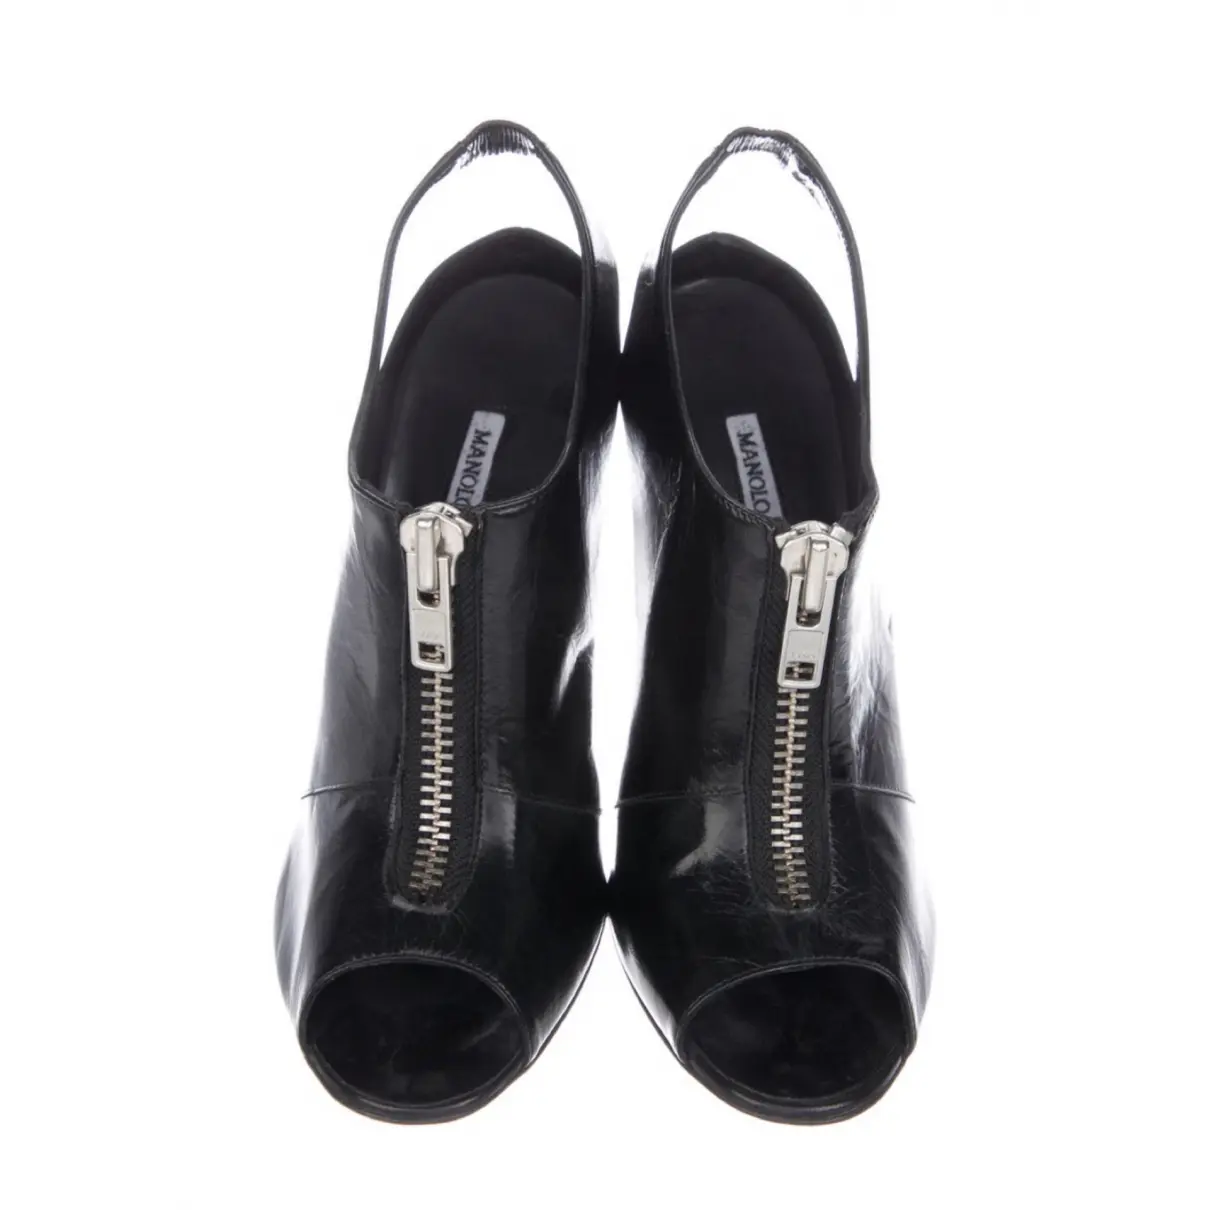 Buy Manolo Blahnik Leather sandals online